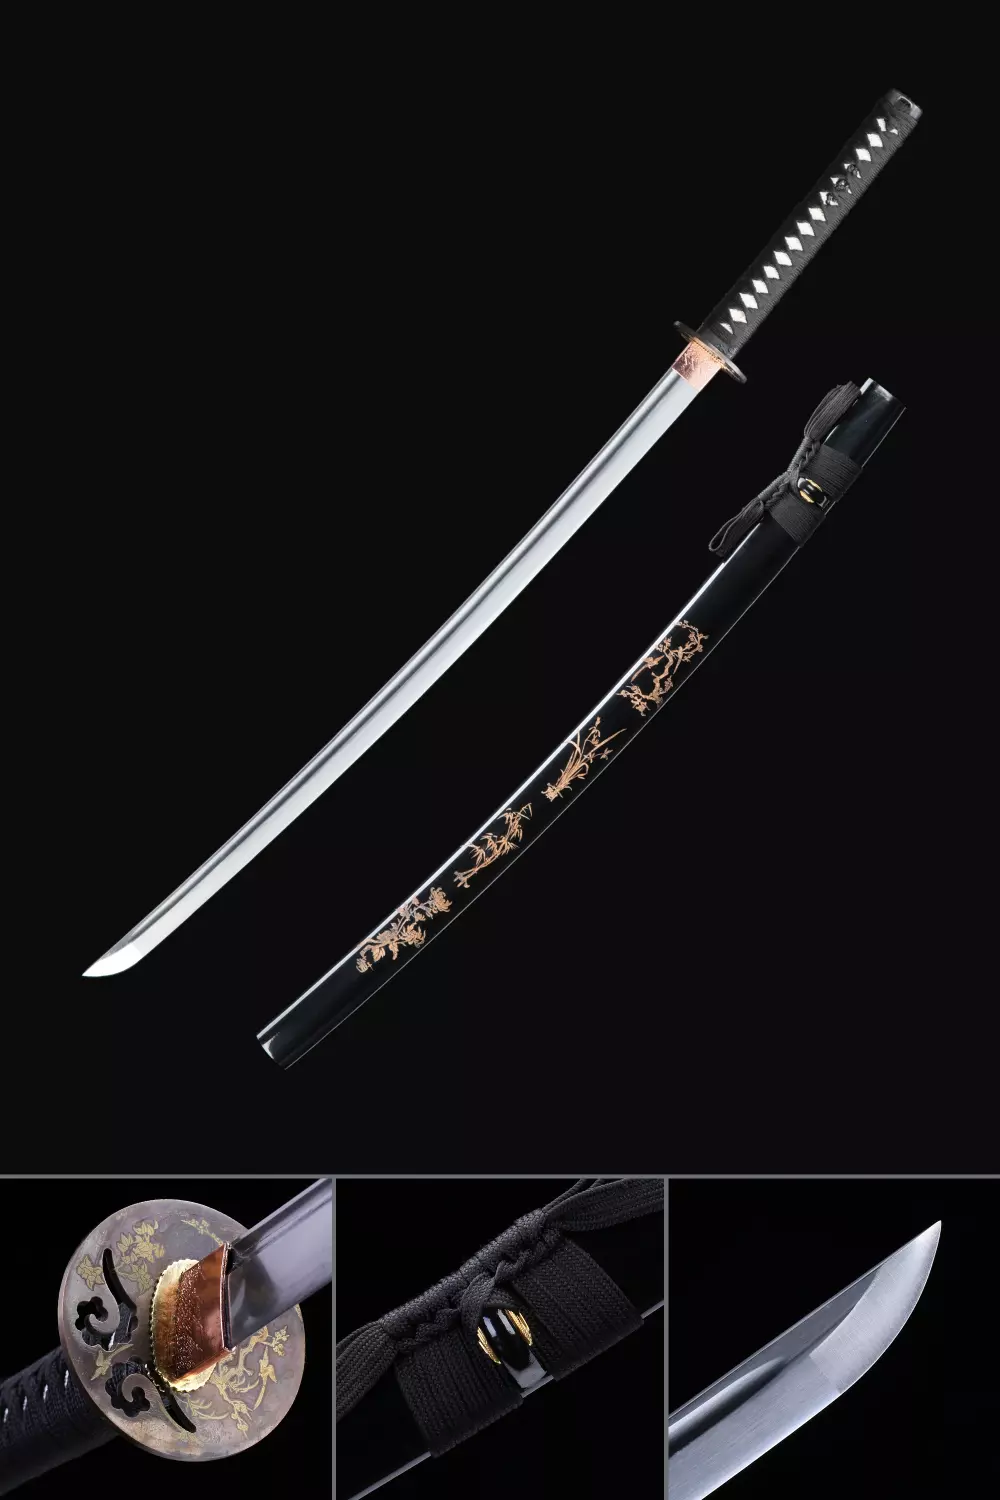  JIHPEN sword, Katana de espiga completa de 41 pulgadas, espada  samurai hecha a mano, 1060 1095 9260 T10 de acero al carbono alto, muy  afilada, negra pura, perfecta para practicidad y